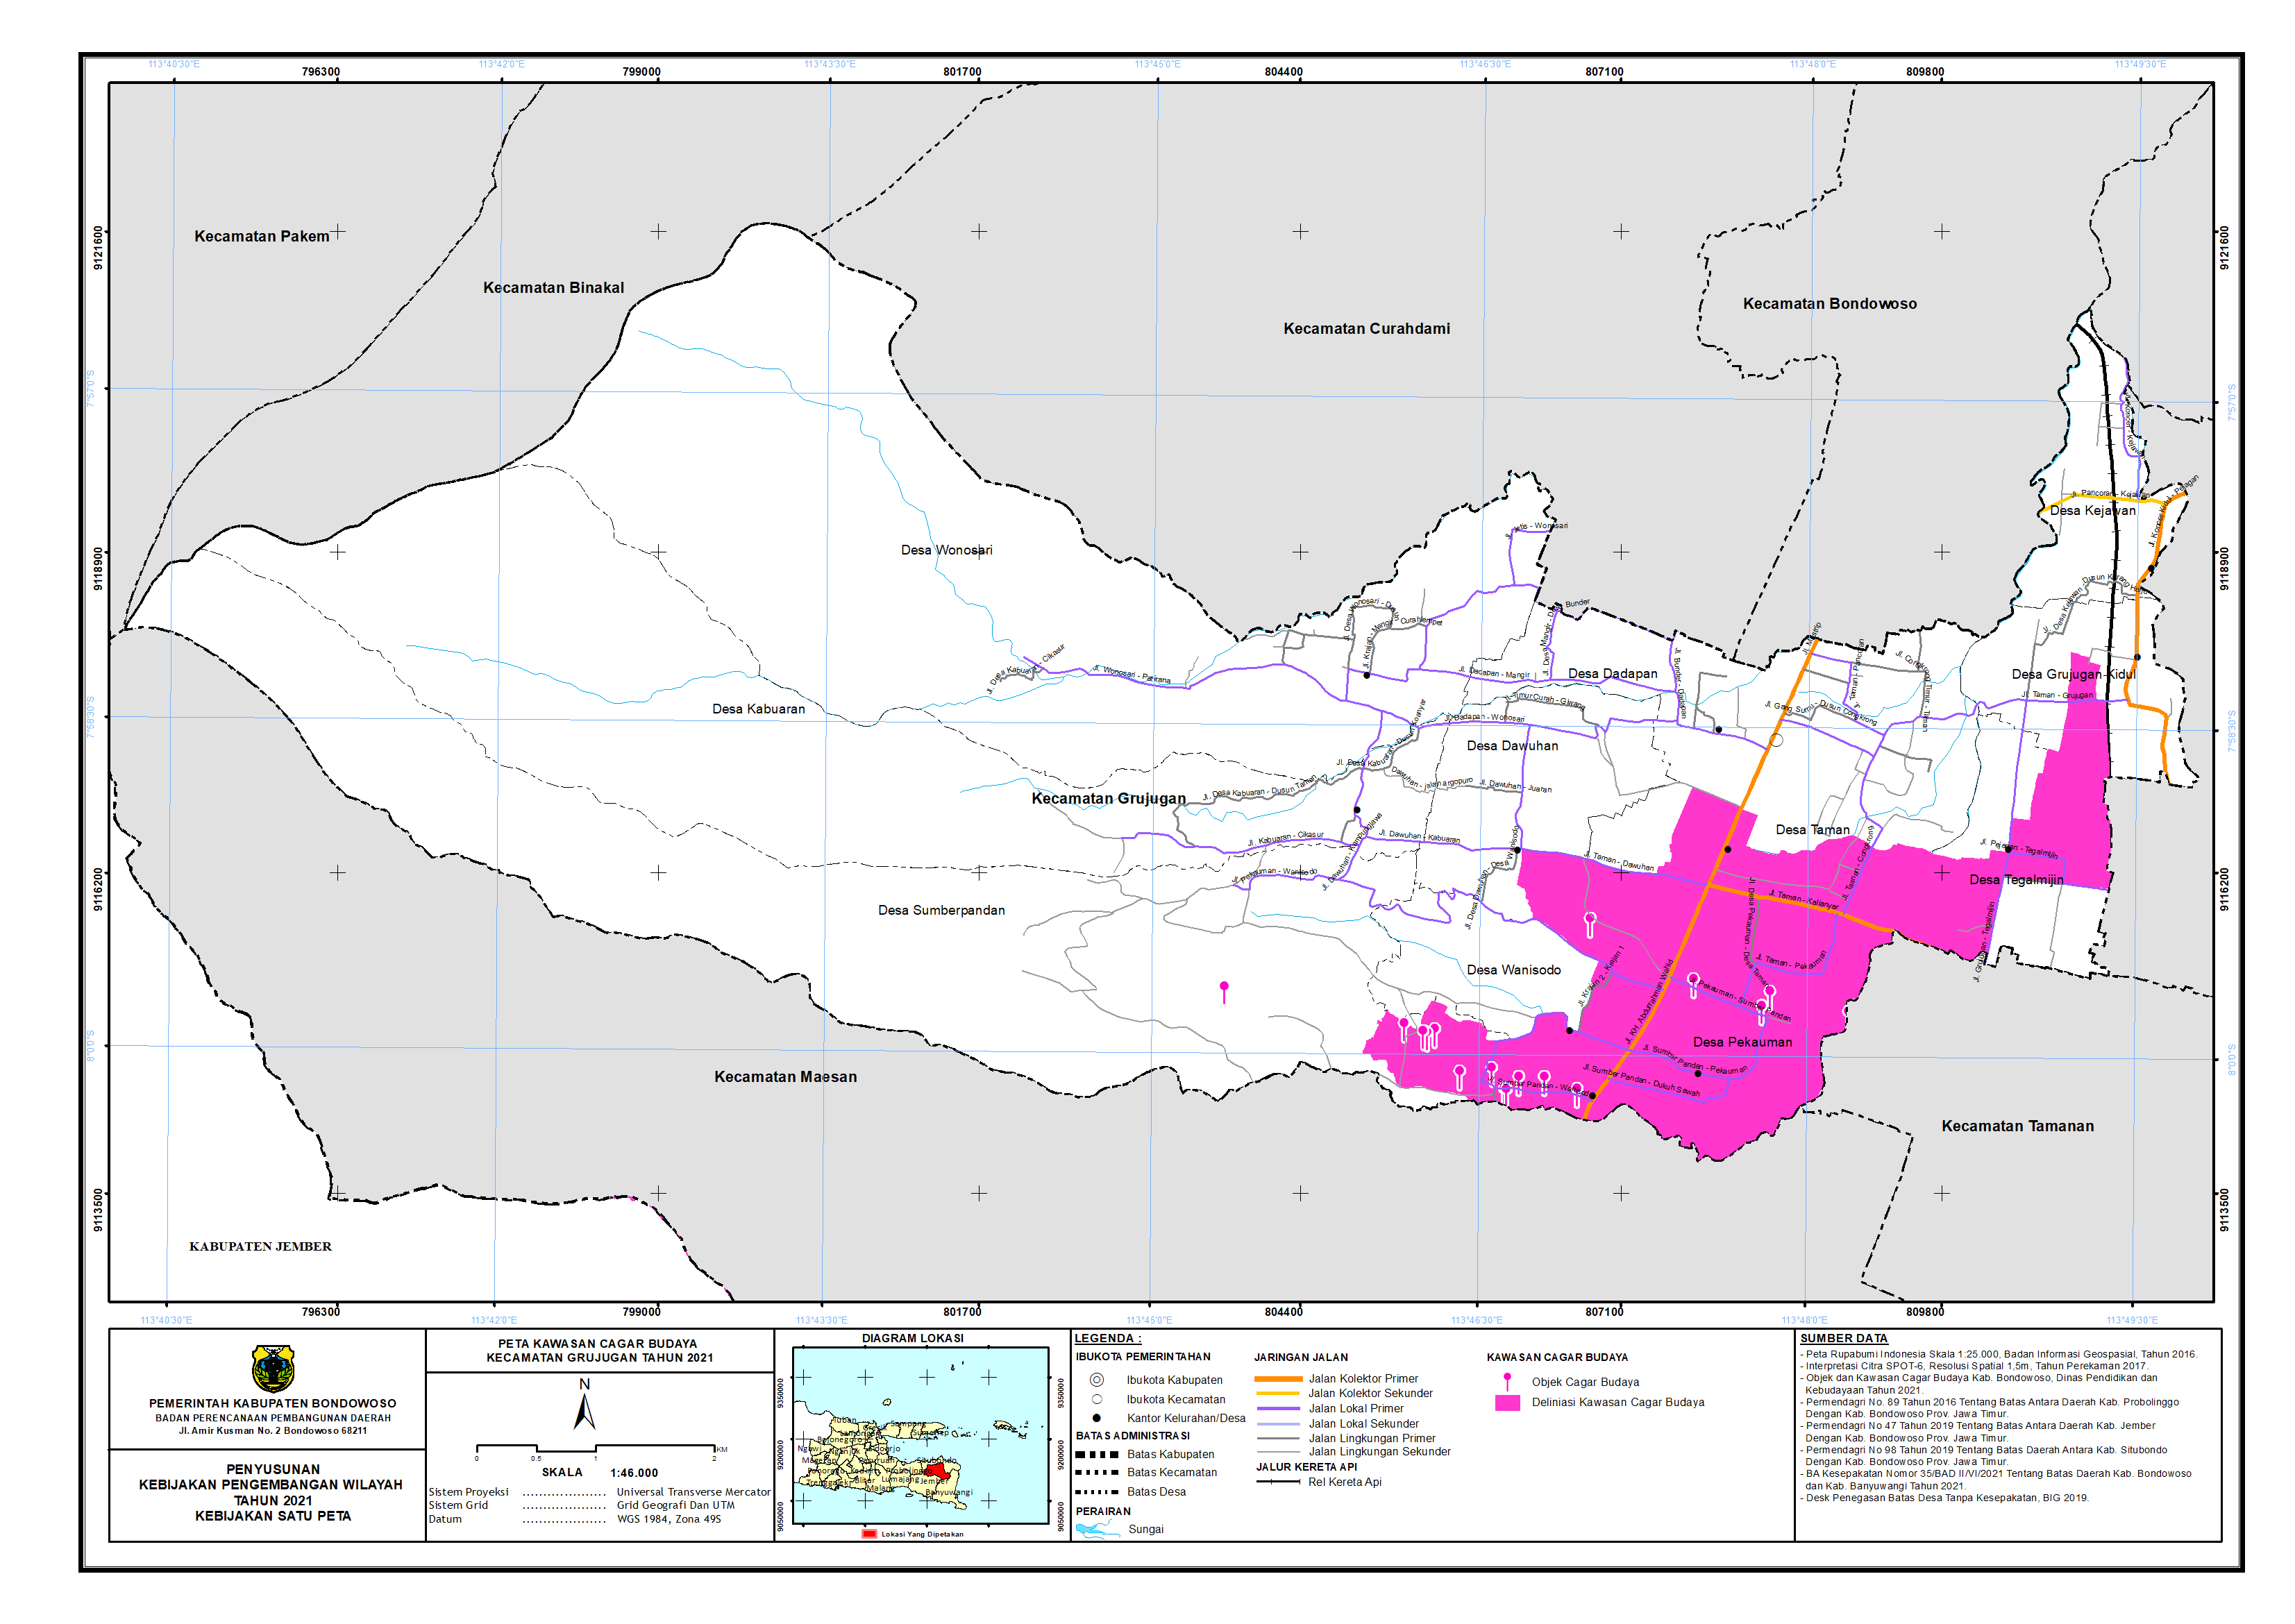 Peta kawasan Cagar Budaya Kecamatan Grujugan.png